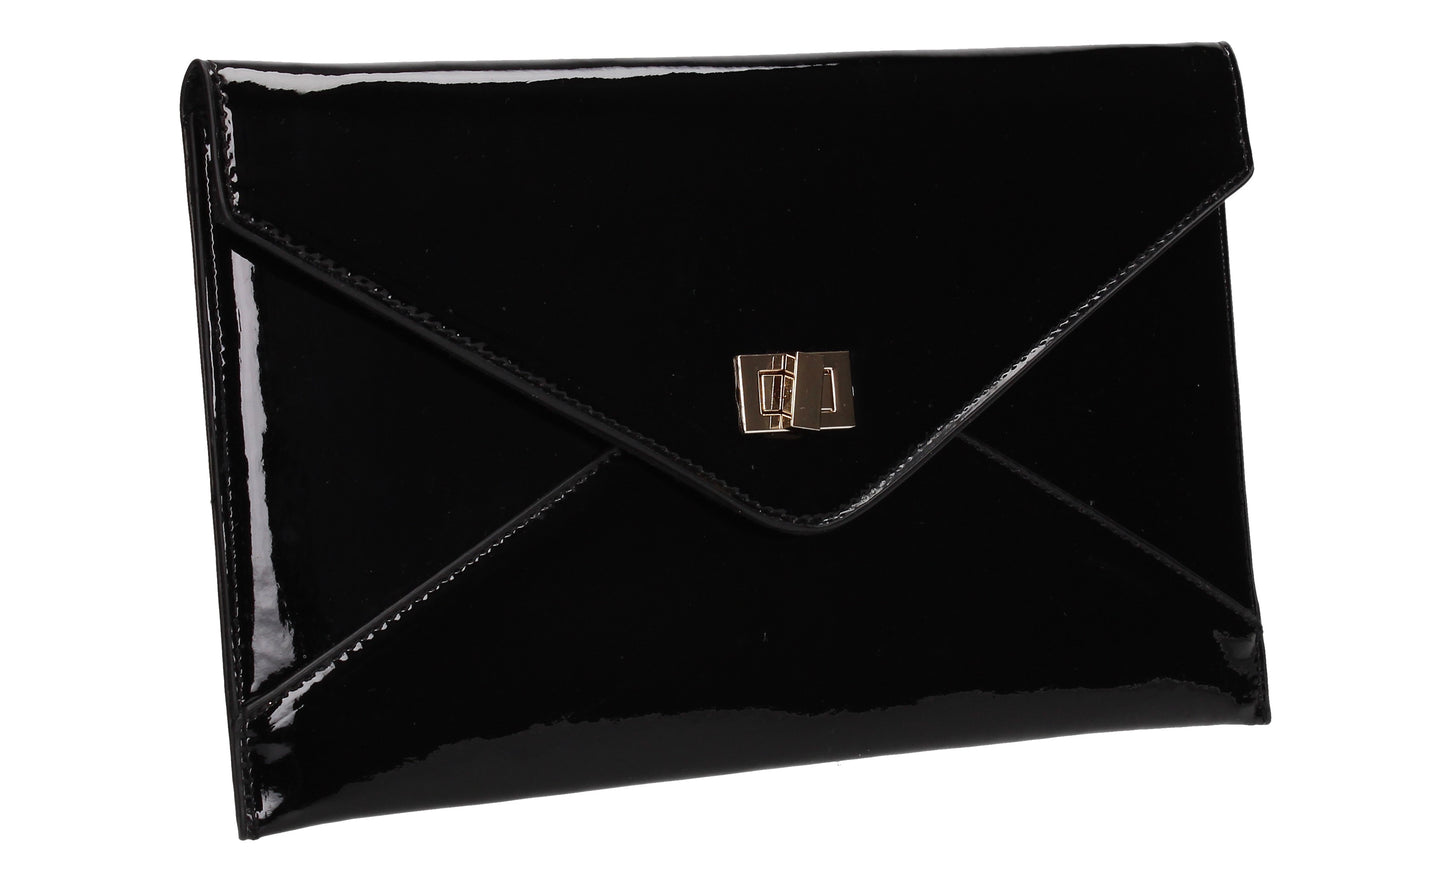 SWANKYSWANS Sarah Envelope Clutch Bag Black Cute Cheap Clutch Bag For Weddings School and Work